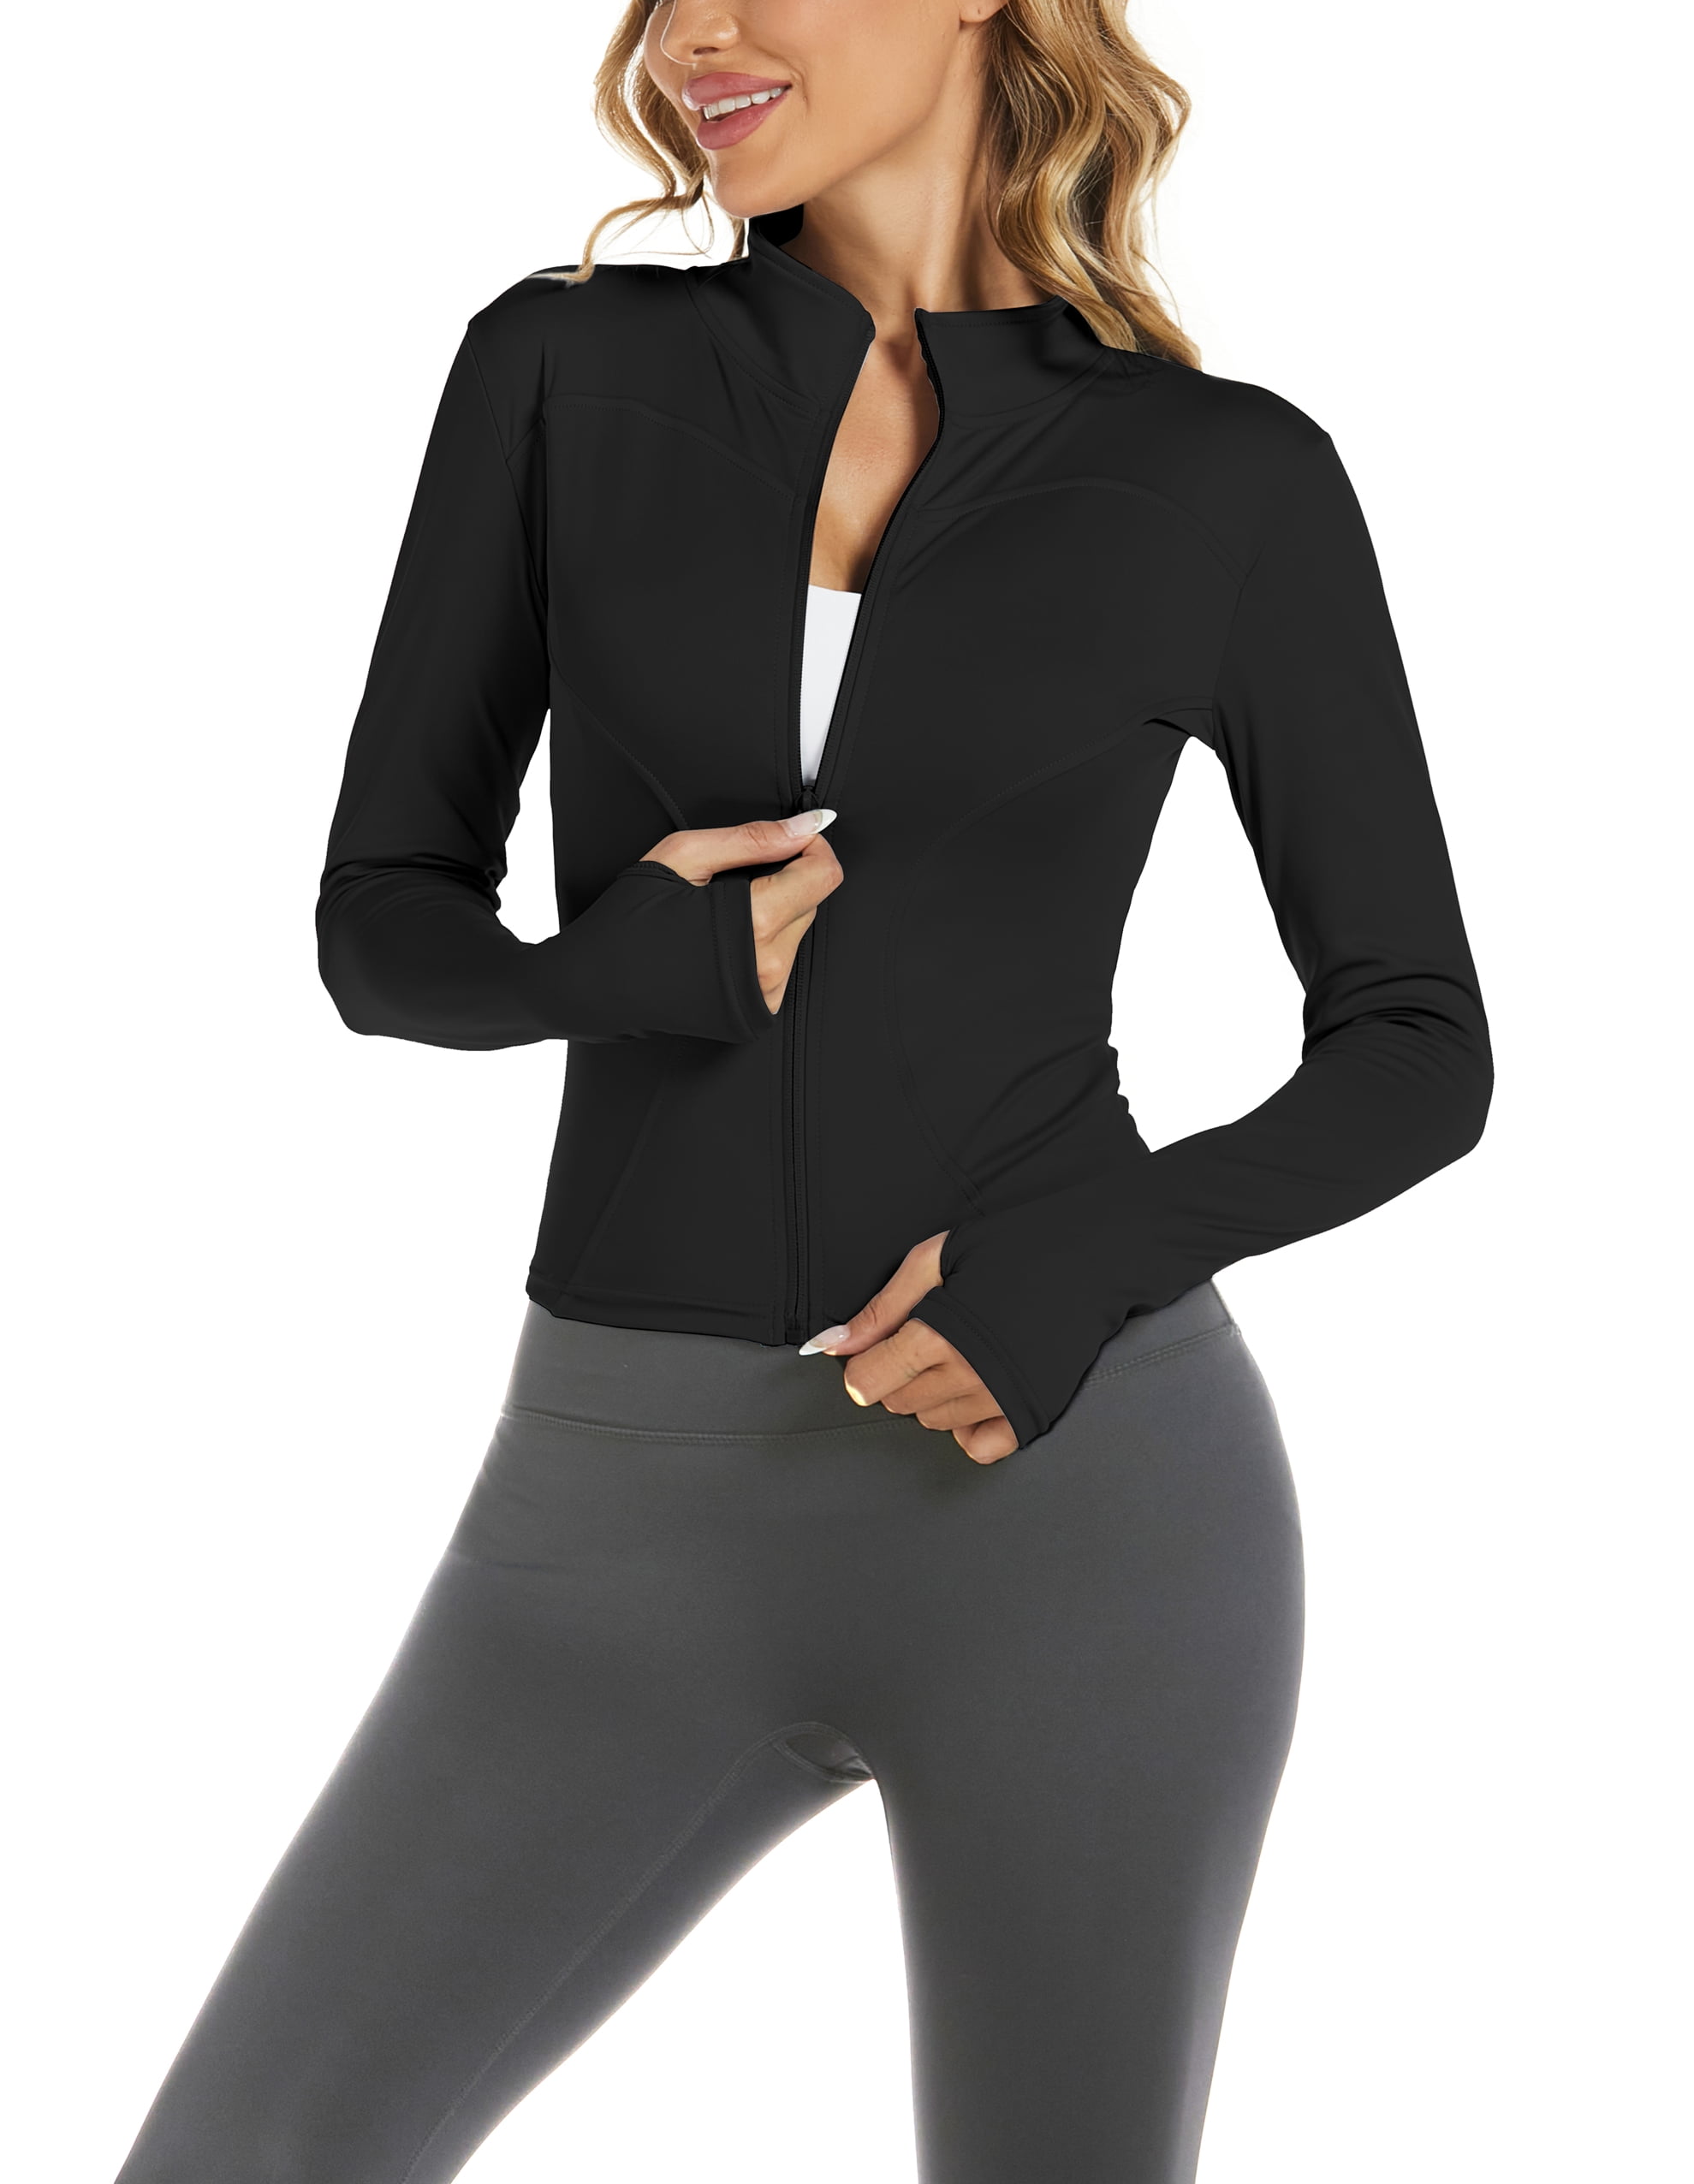 Aoouku Women's Long Sleeve Tops Cropped Jackets Zip up Gym Jacket Workout  Dry Fit Shirts Athletic Yoga Basics Light Jackets Black M